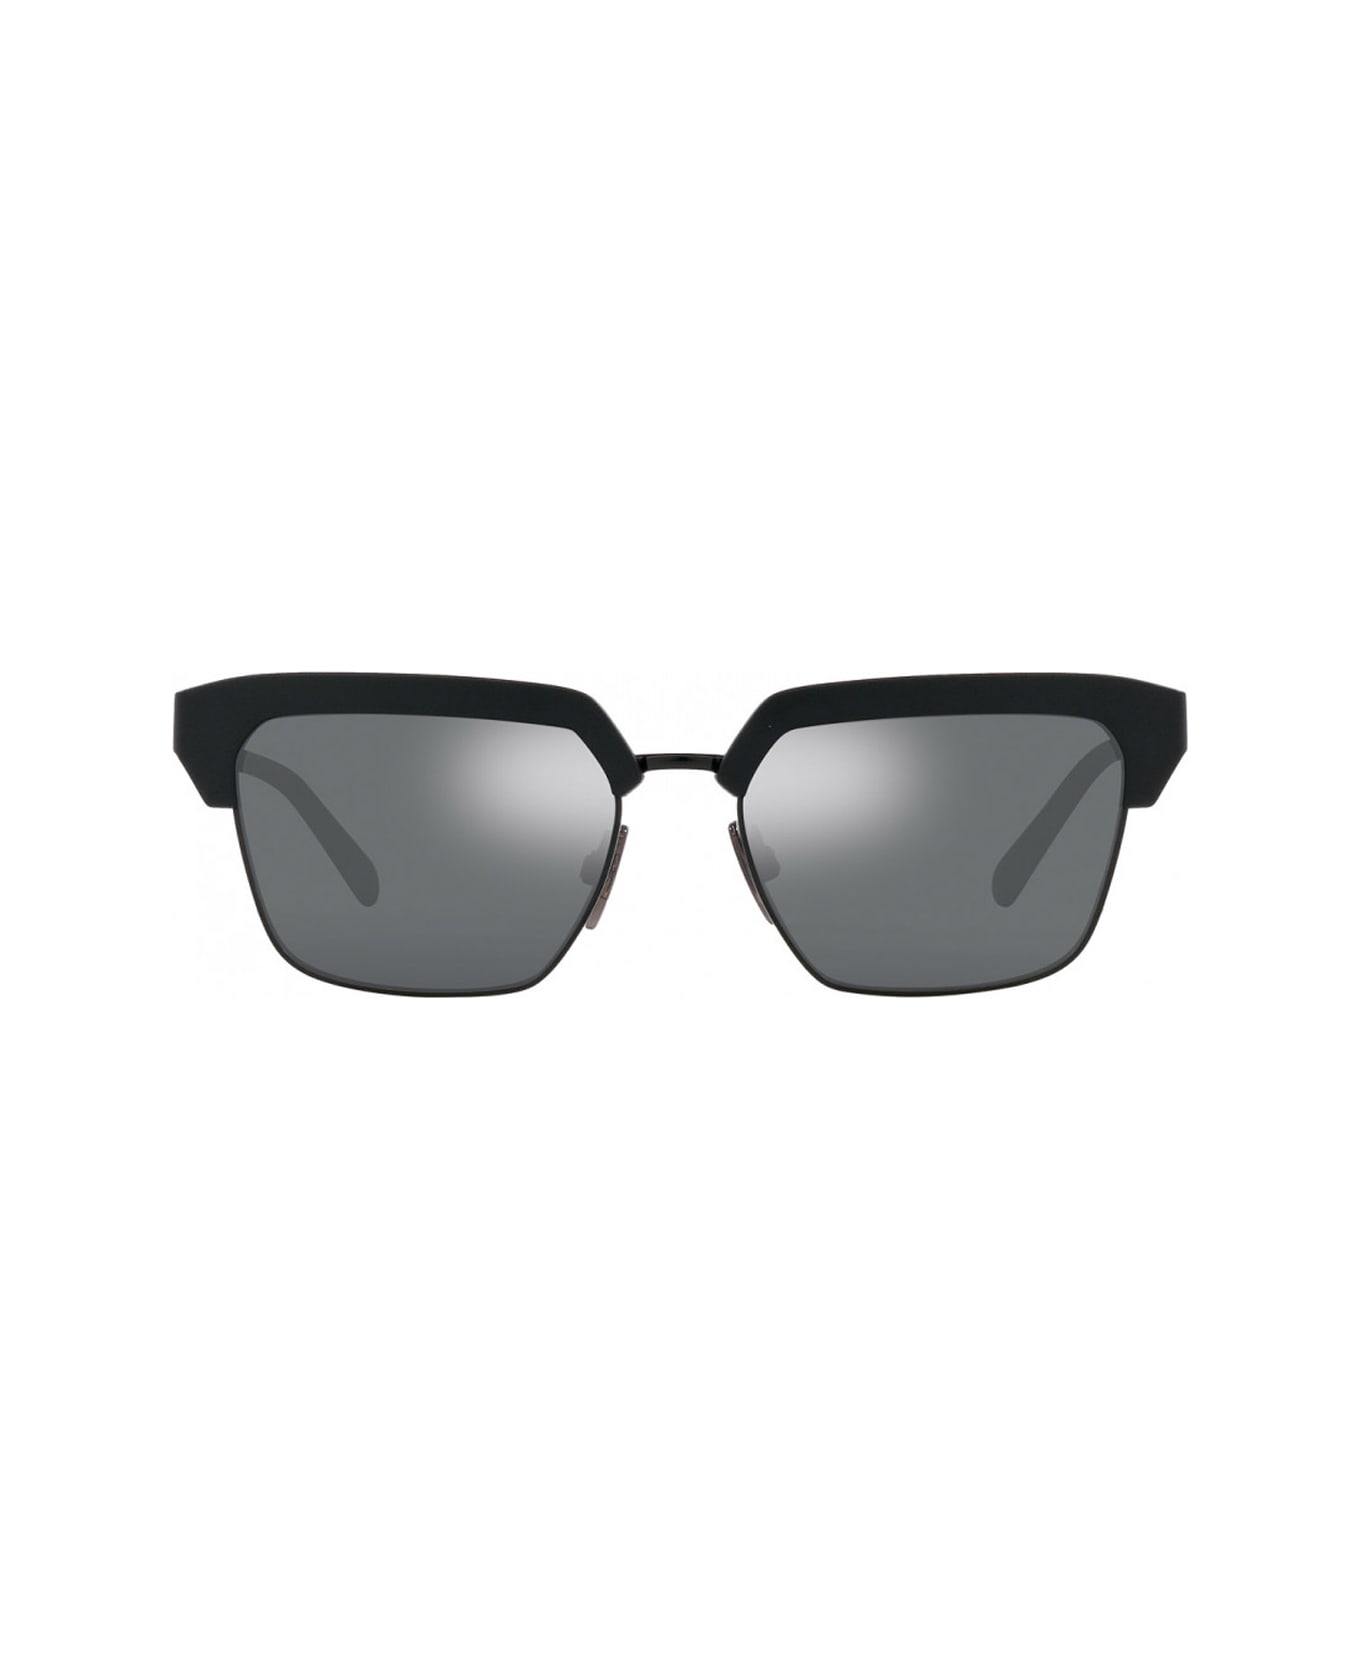 Dolce & Gabbana Eyewear Dg6185 25256g Sunglasses - Nero